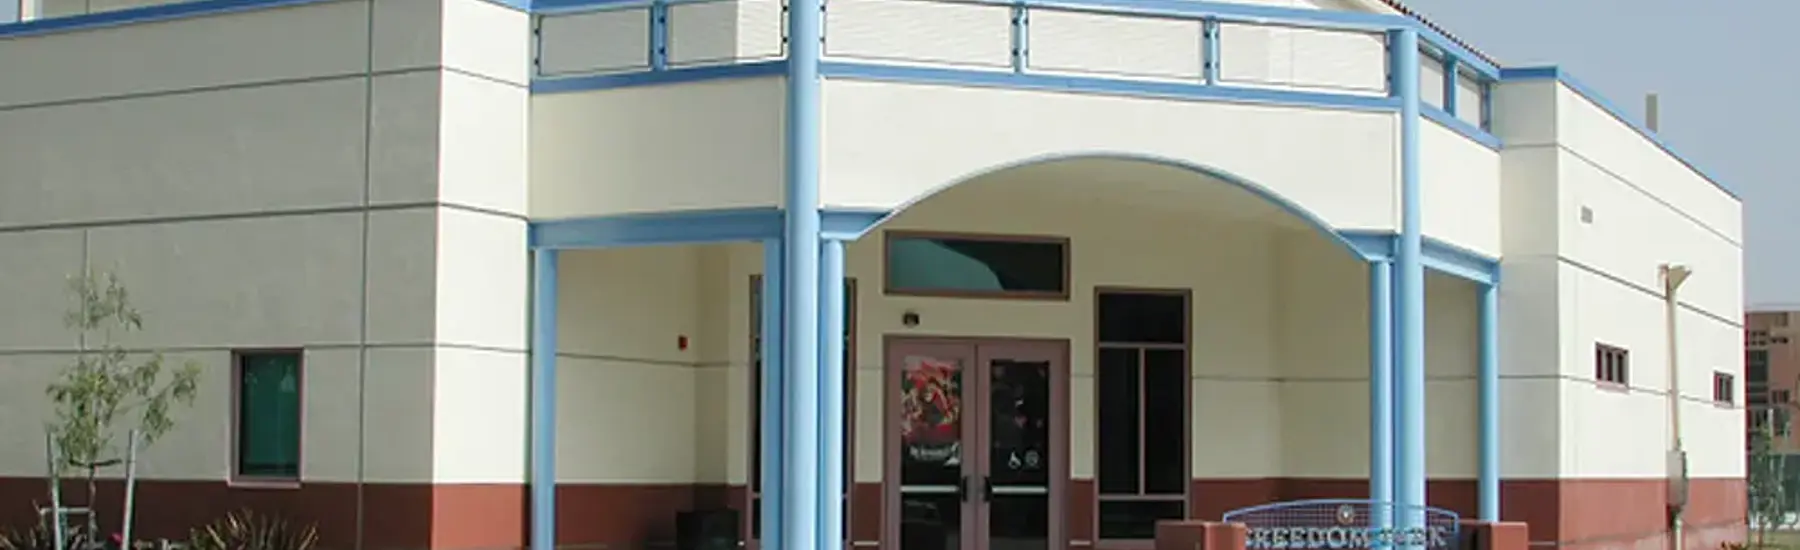 Los Angeles Unified School District - Corona Park & Recreation Center